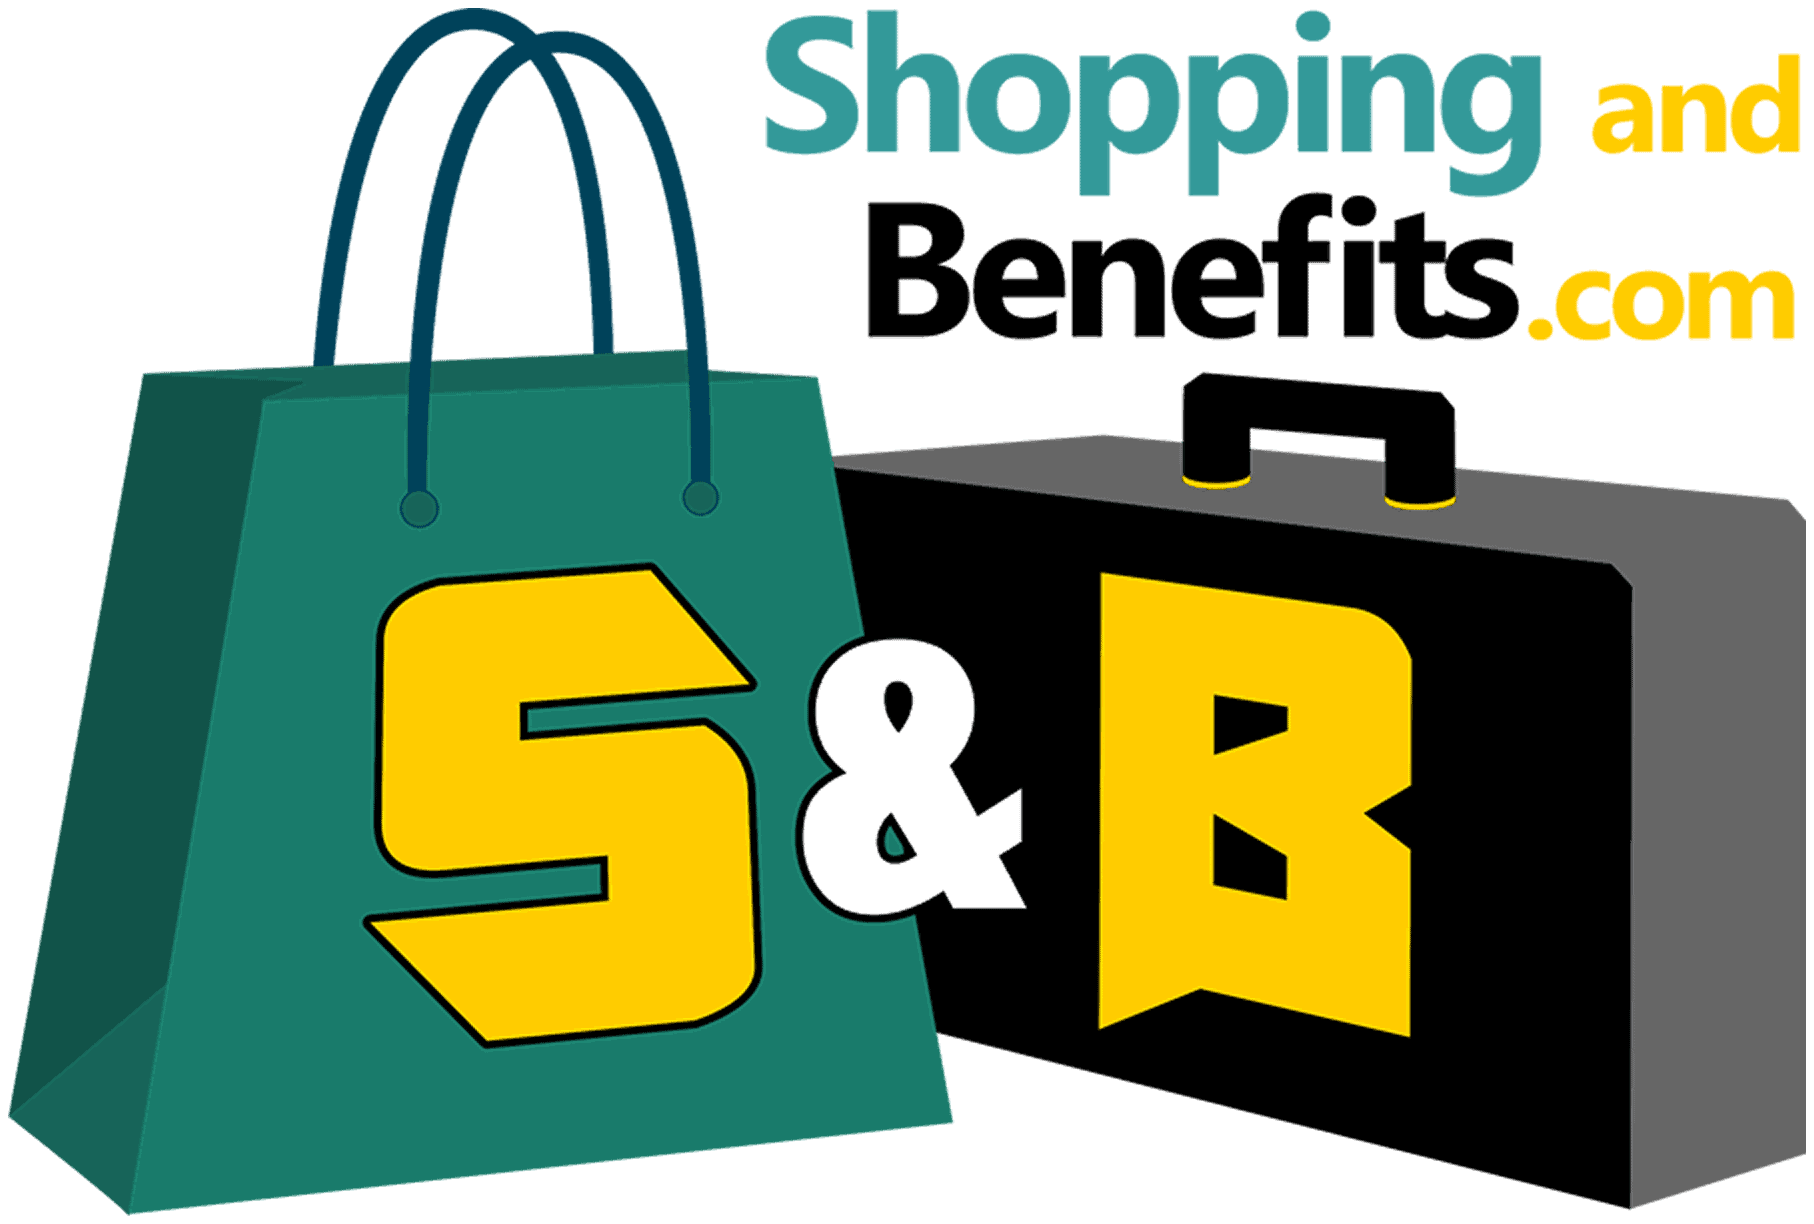 ShopingandBenefits.com